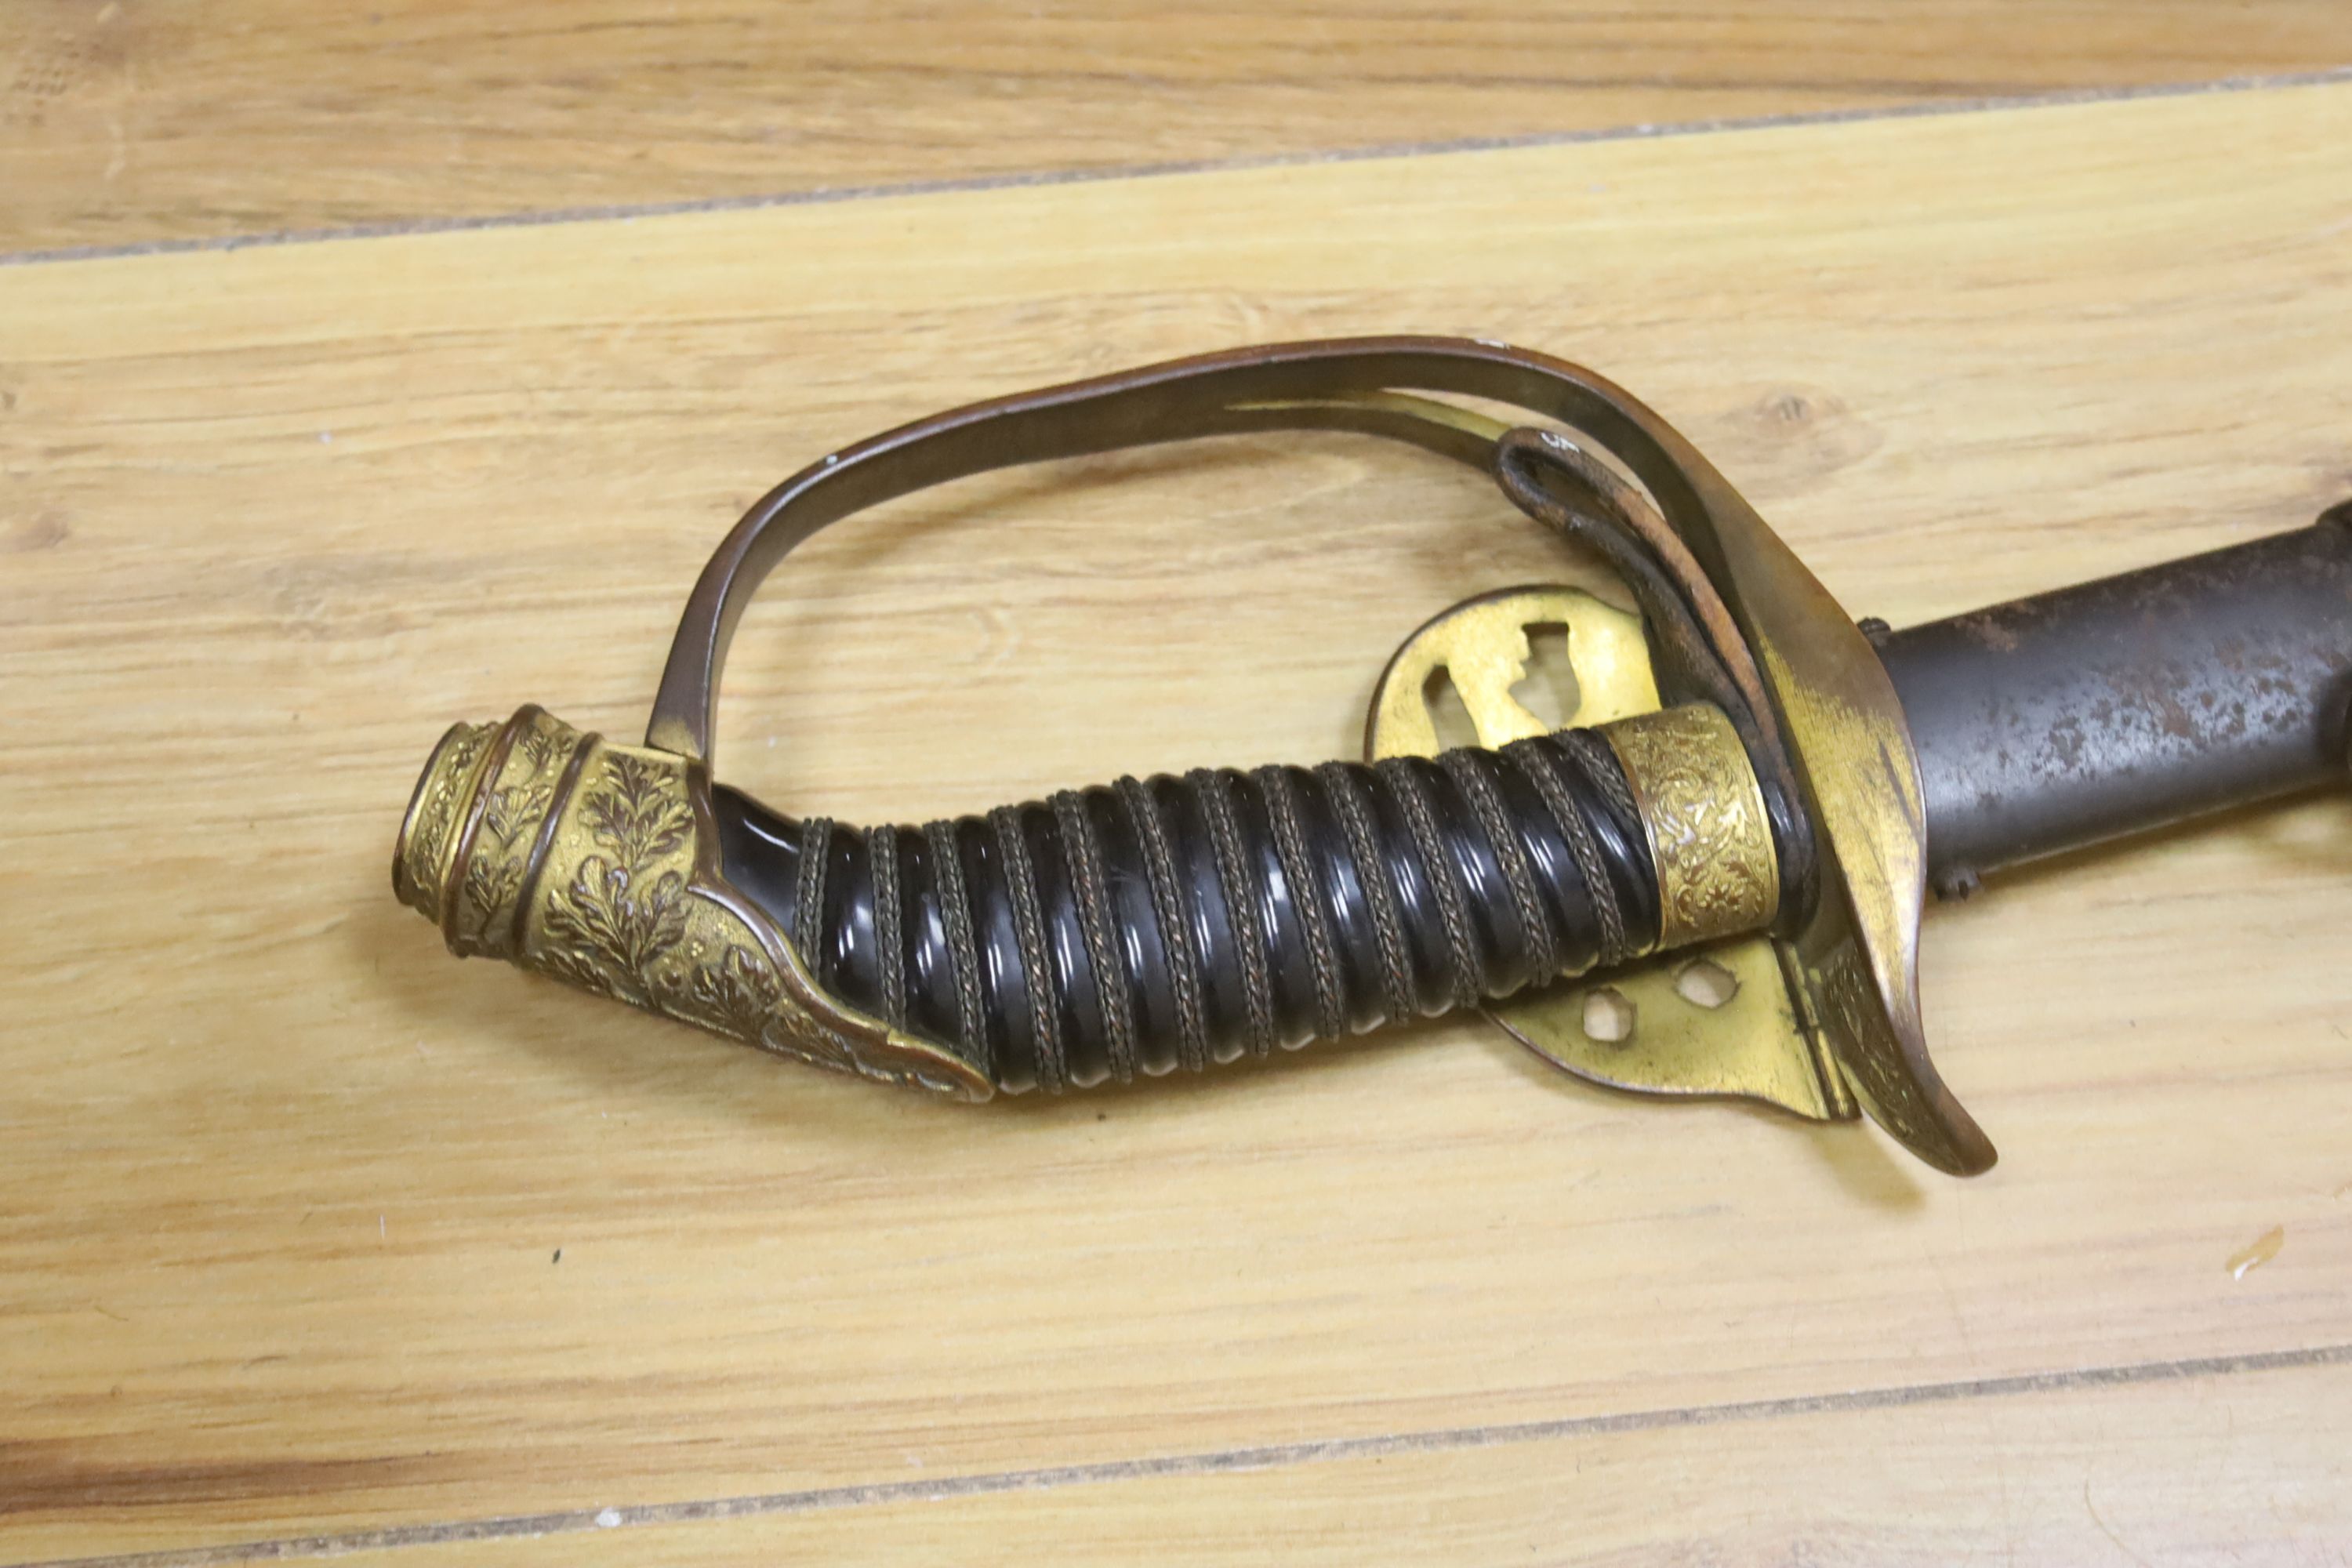 A late 19th century German Officer's sword, overall length 99cm, Carl Eickhorn blade